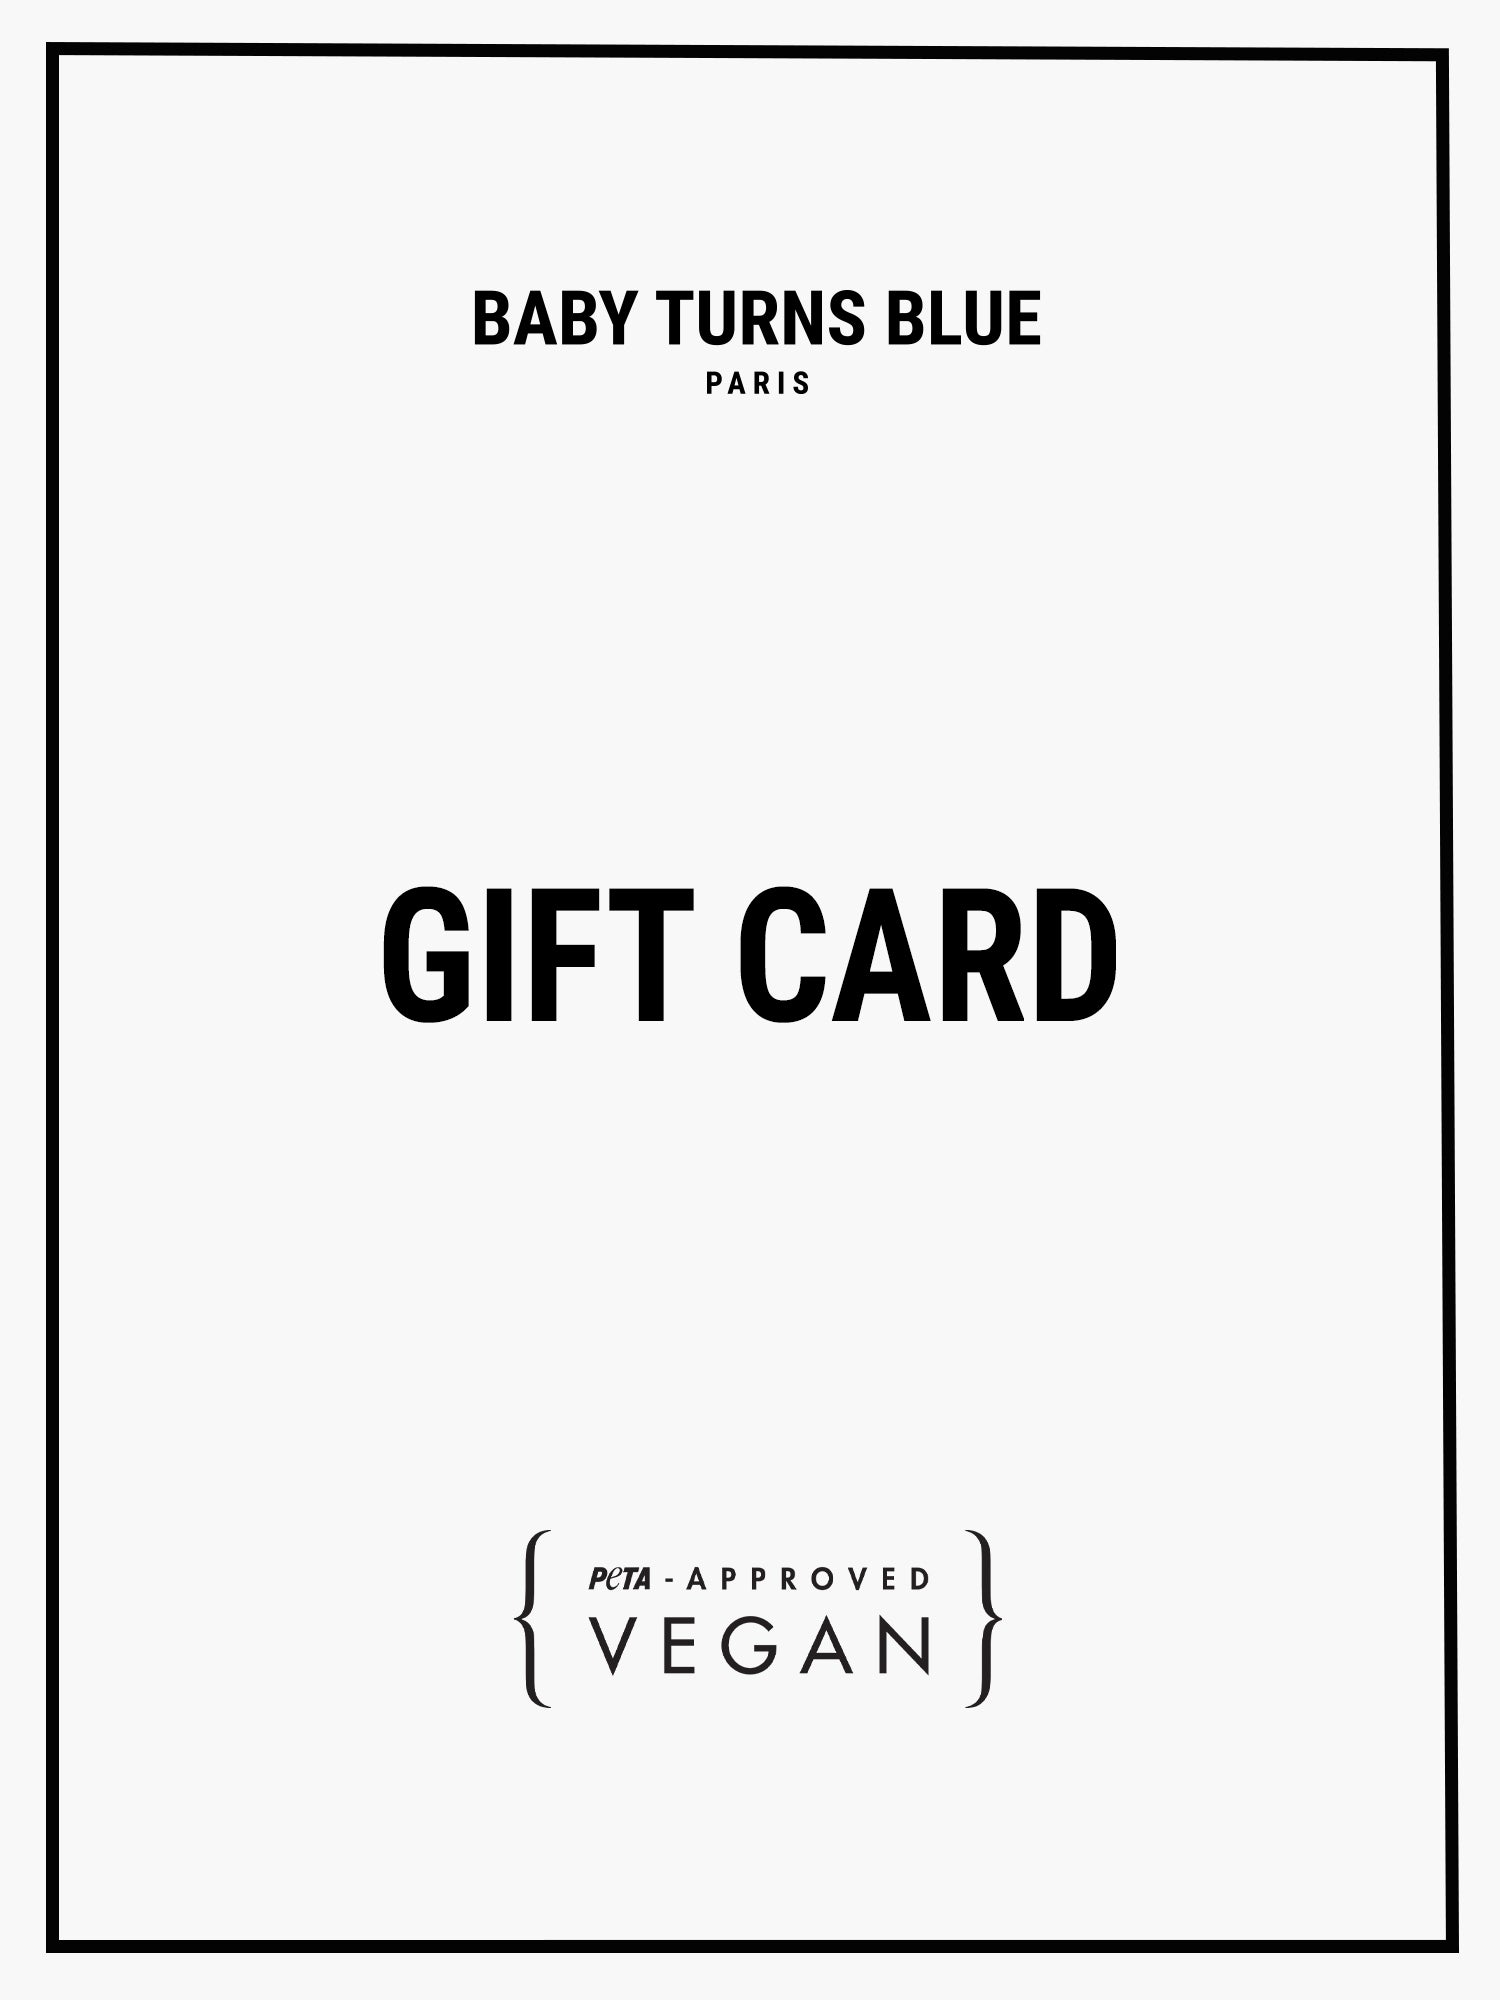 Baby turns Blue Paris Gift Card